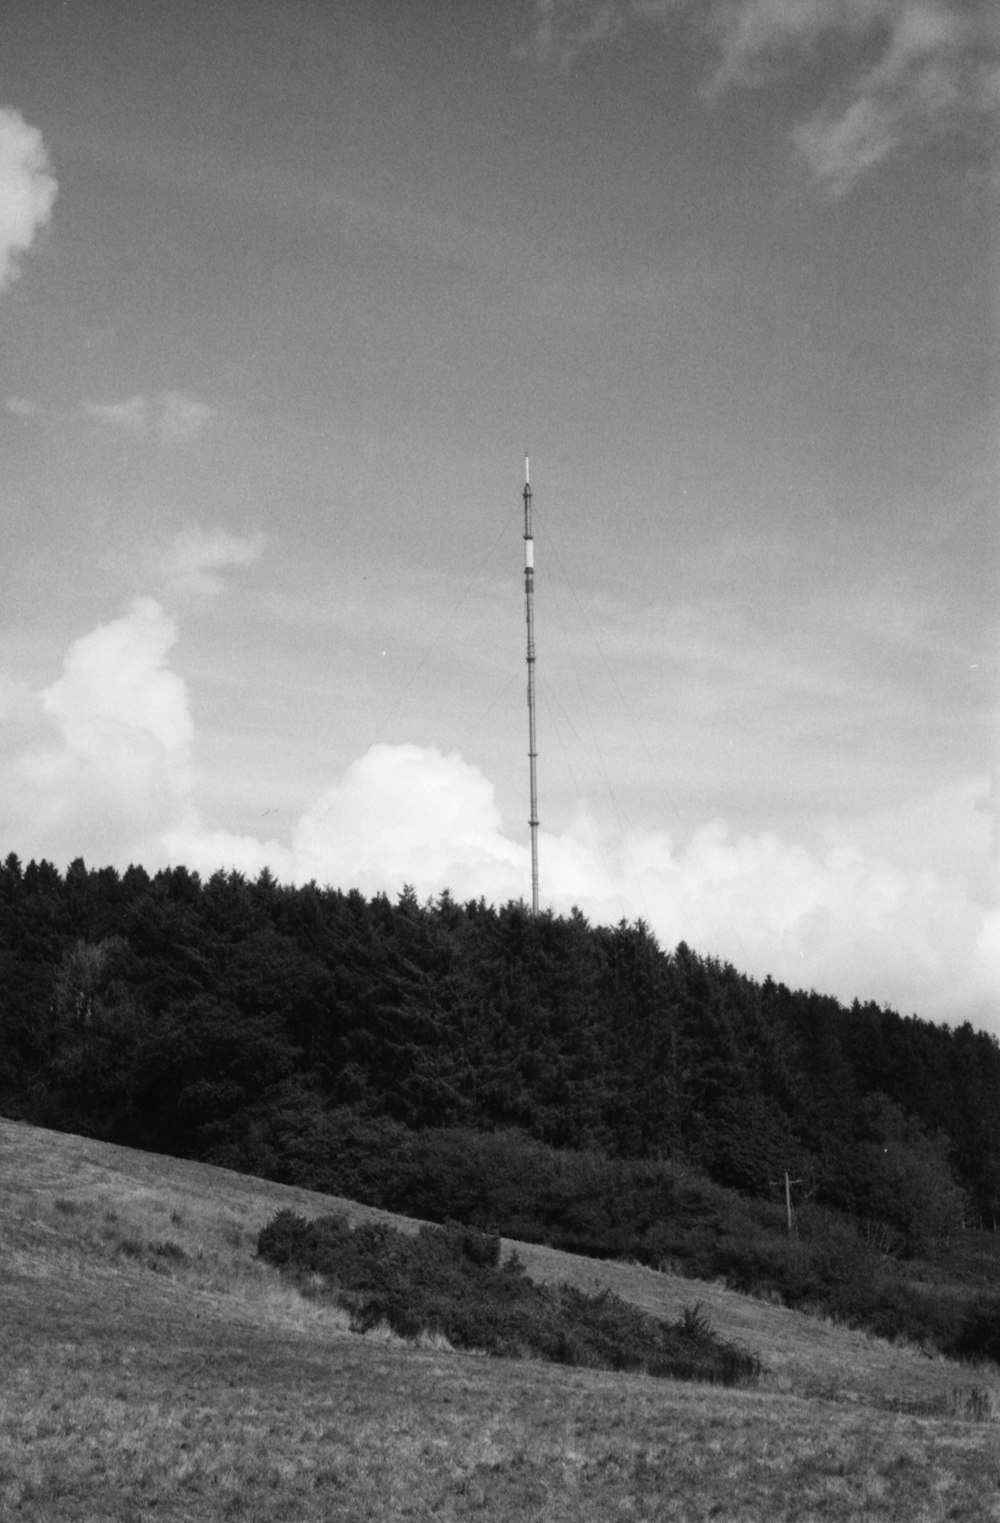 a tall antenna on a hill